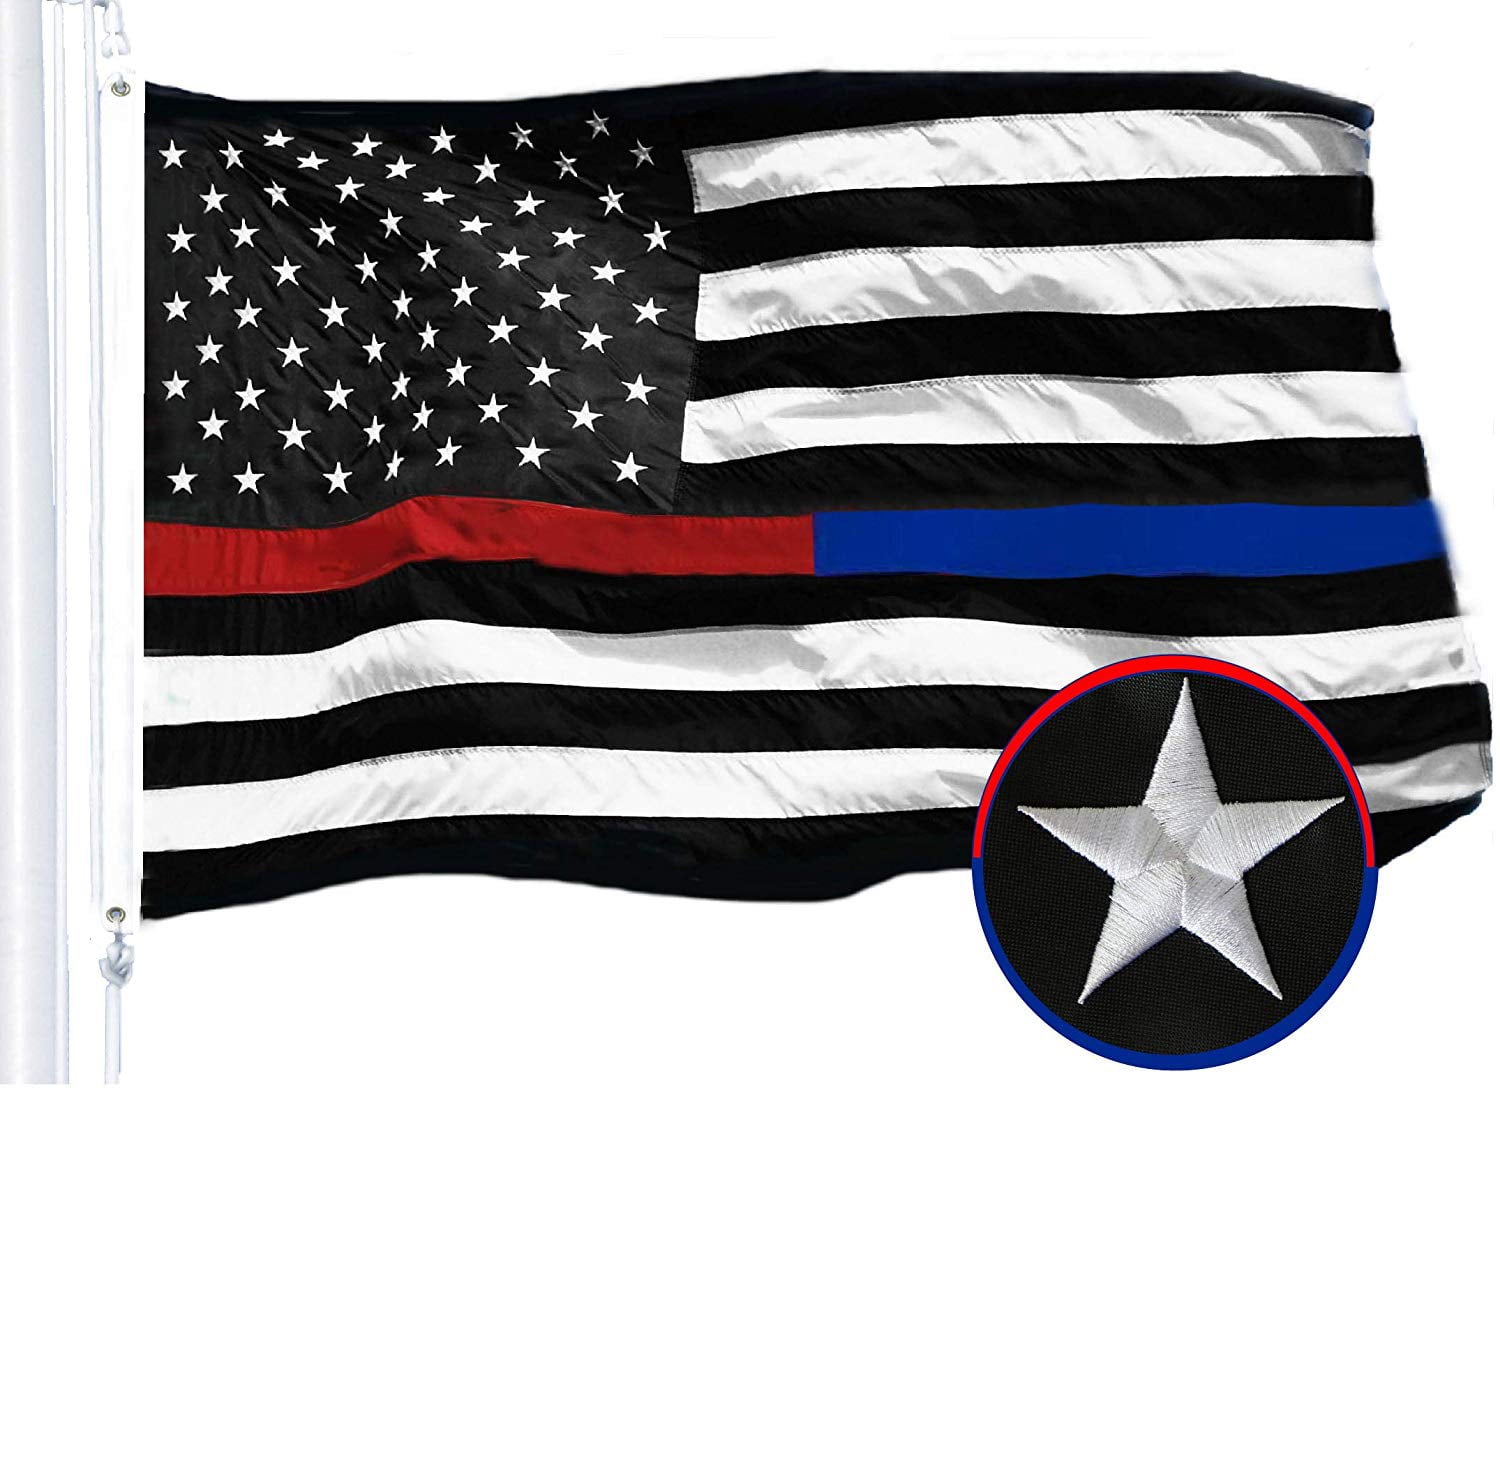 Details about   Blue Lives Matter USA Thin Blue Line Police Law Enforcement 3x5 Feet Flag 